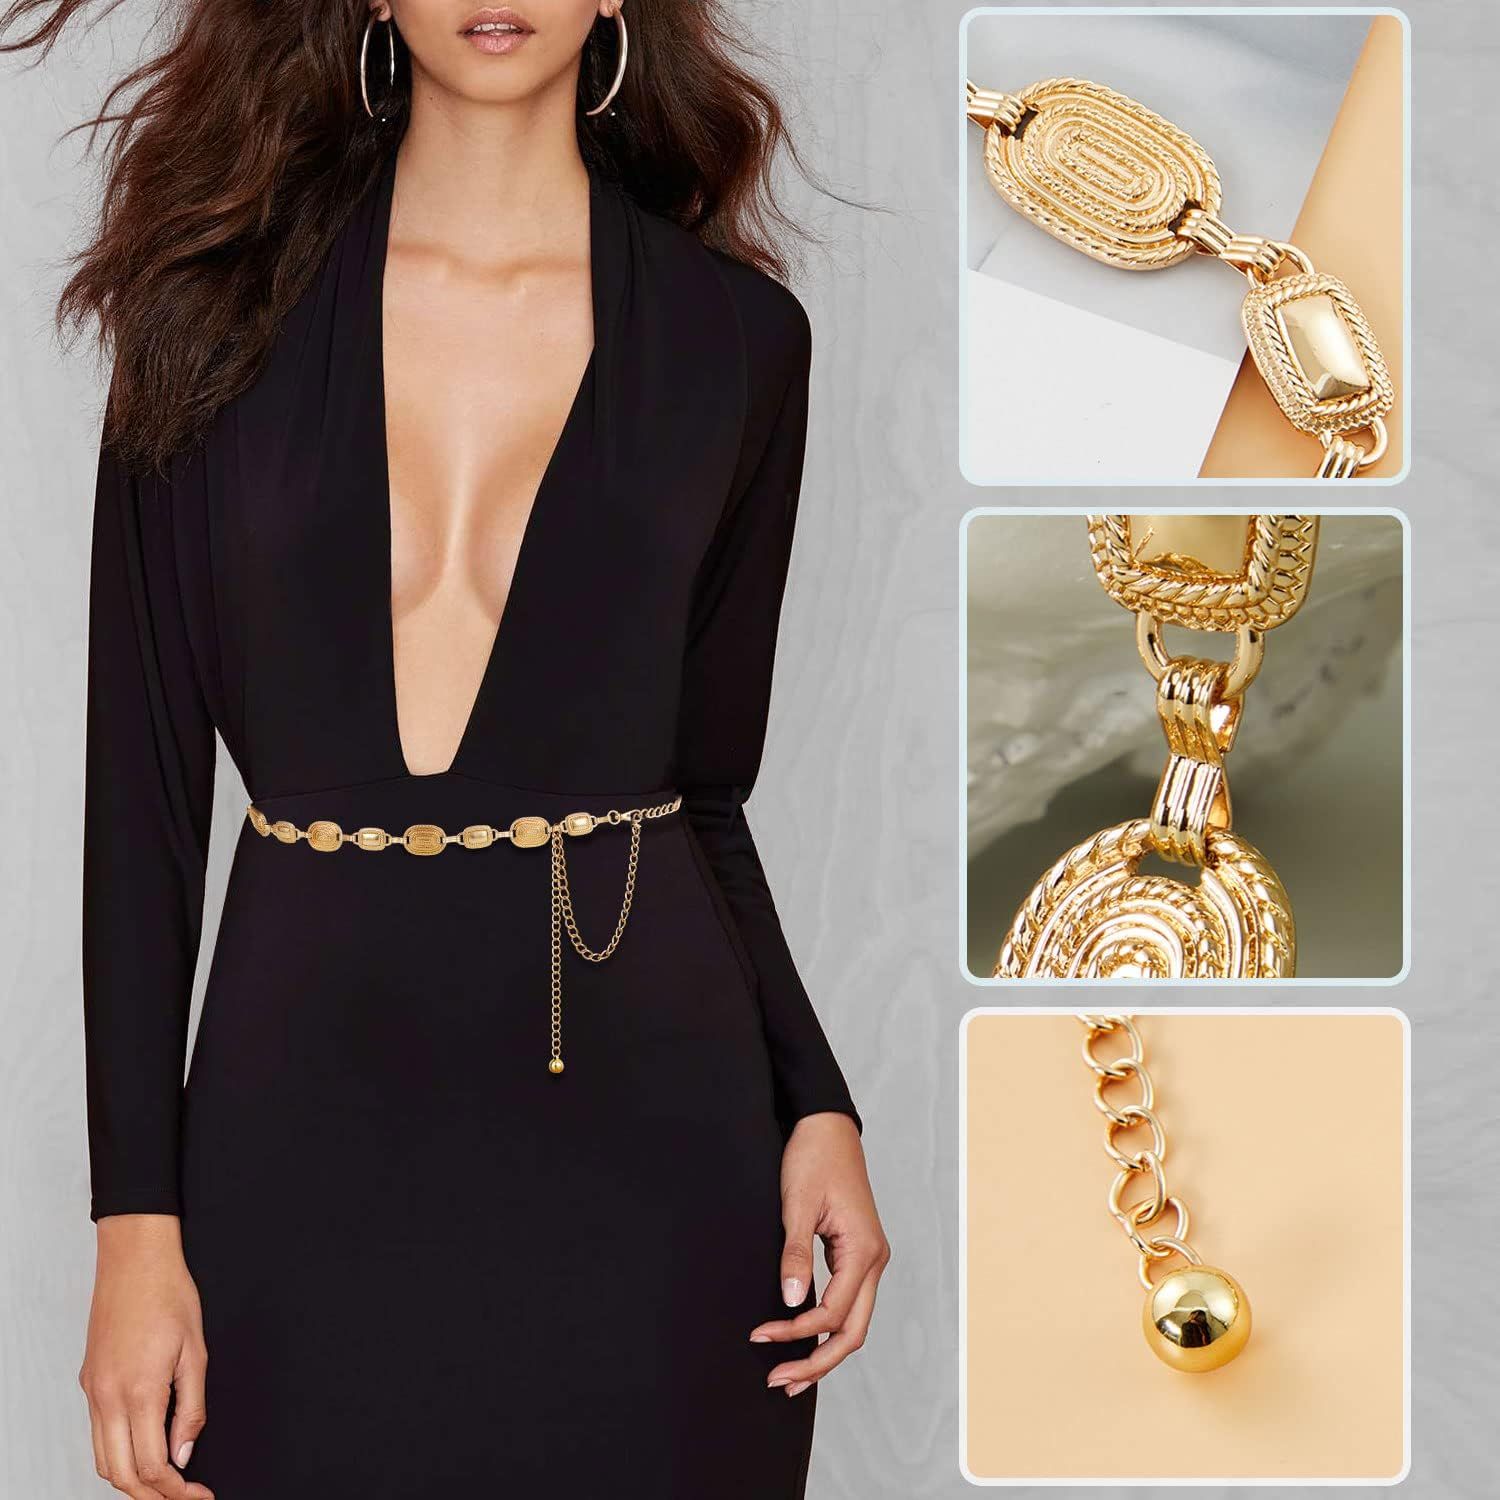 FIORETTO Chain Belt for Women Oval Metal Waist Chain Western Belts for Dress | Amazon (US)